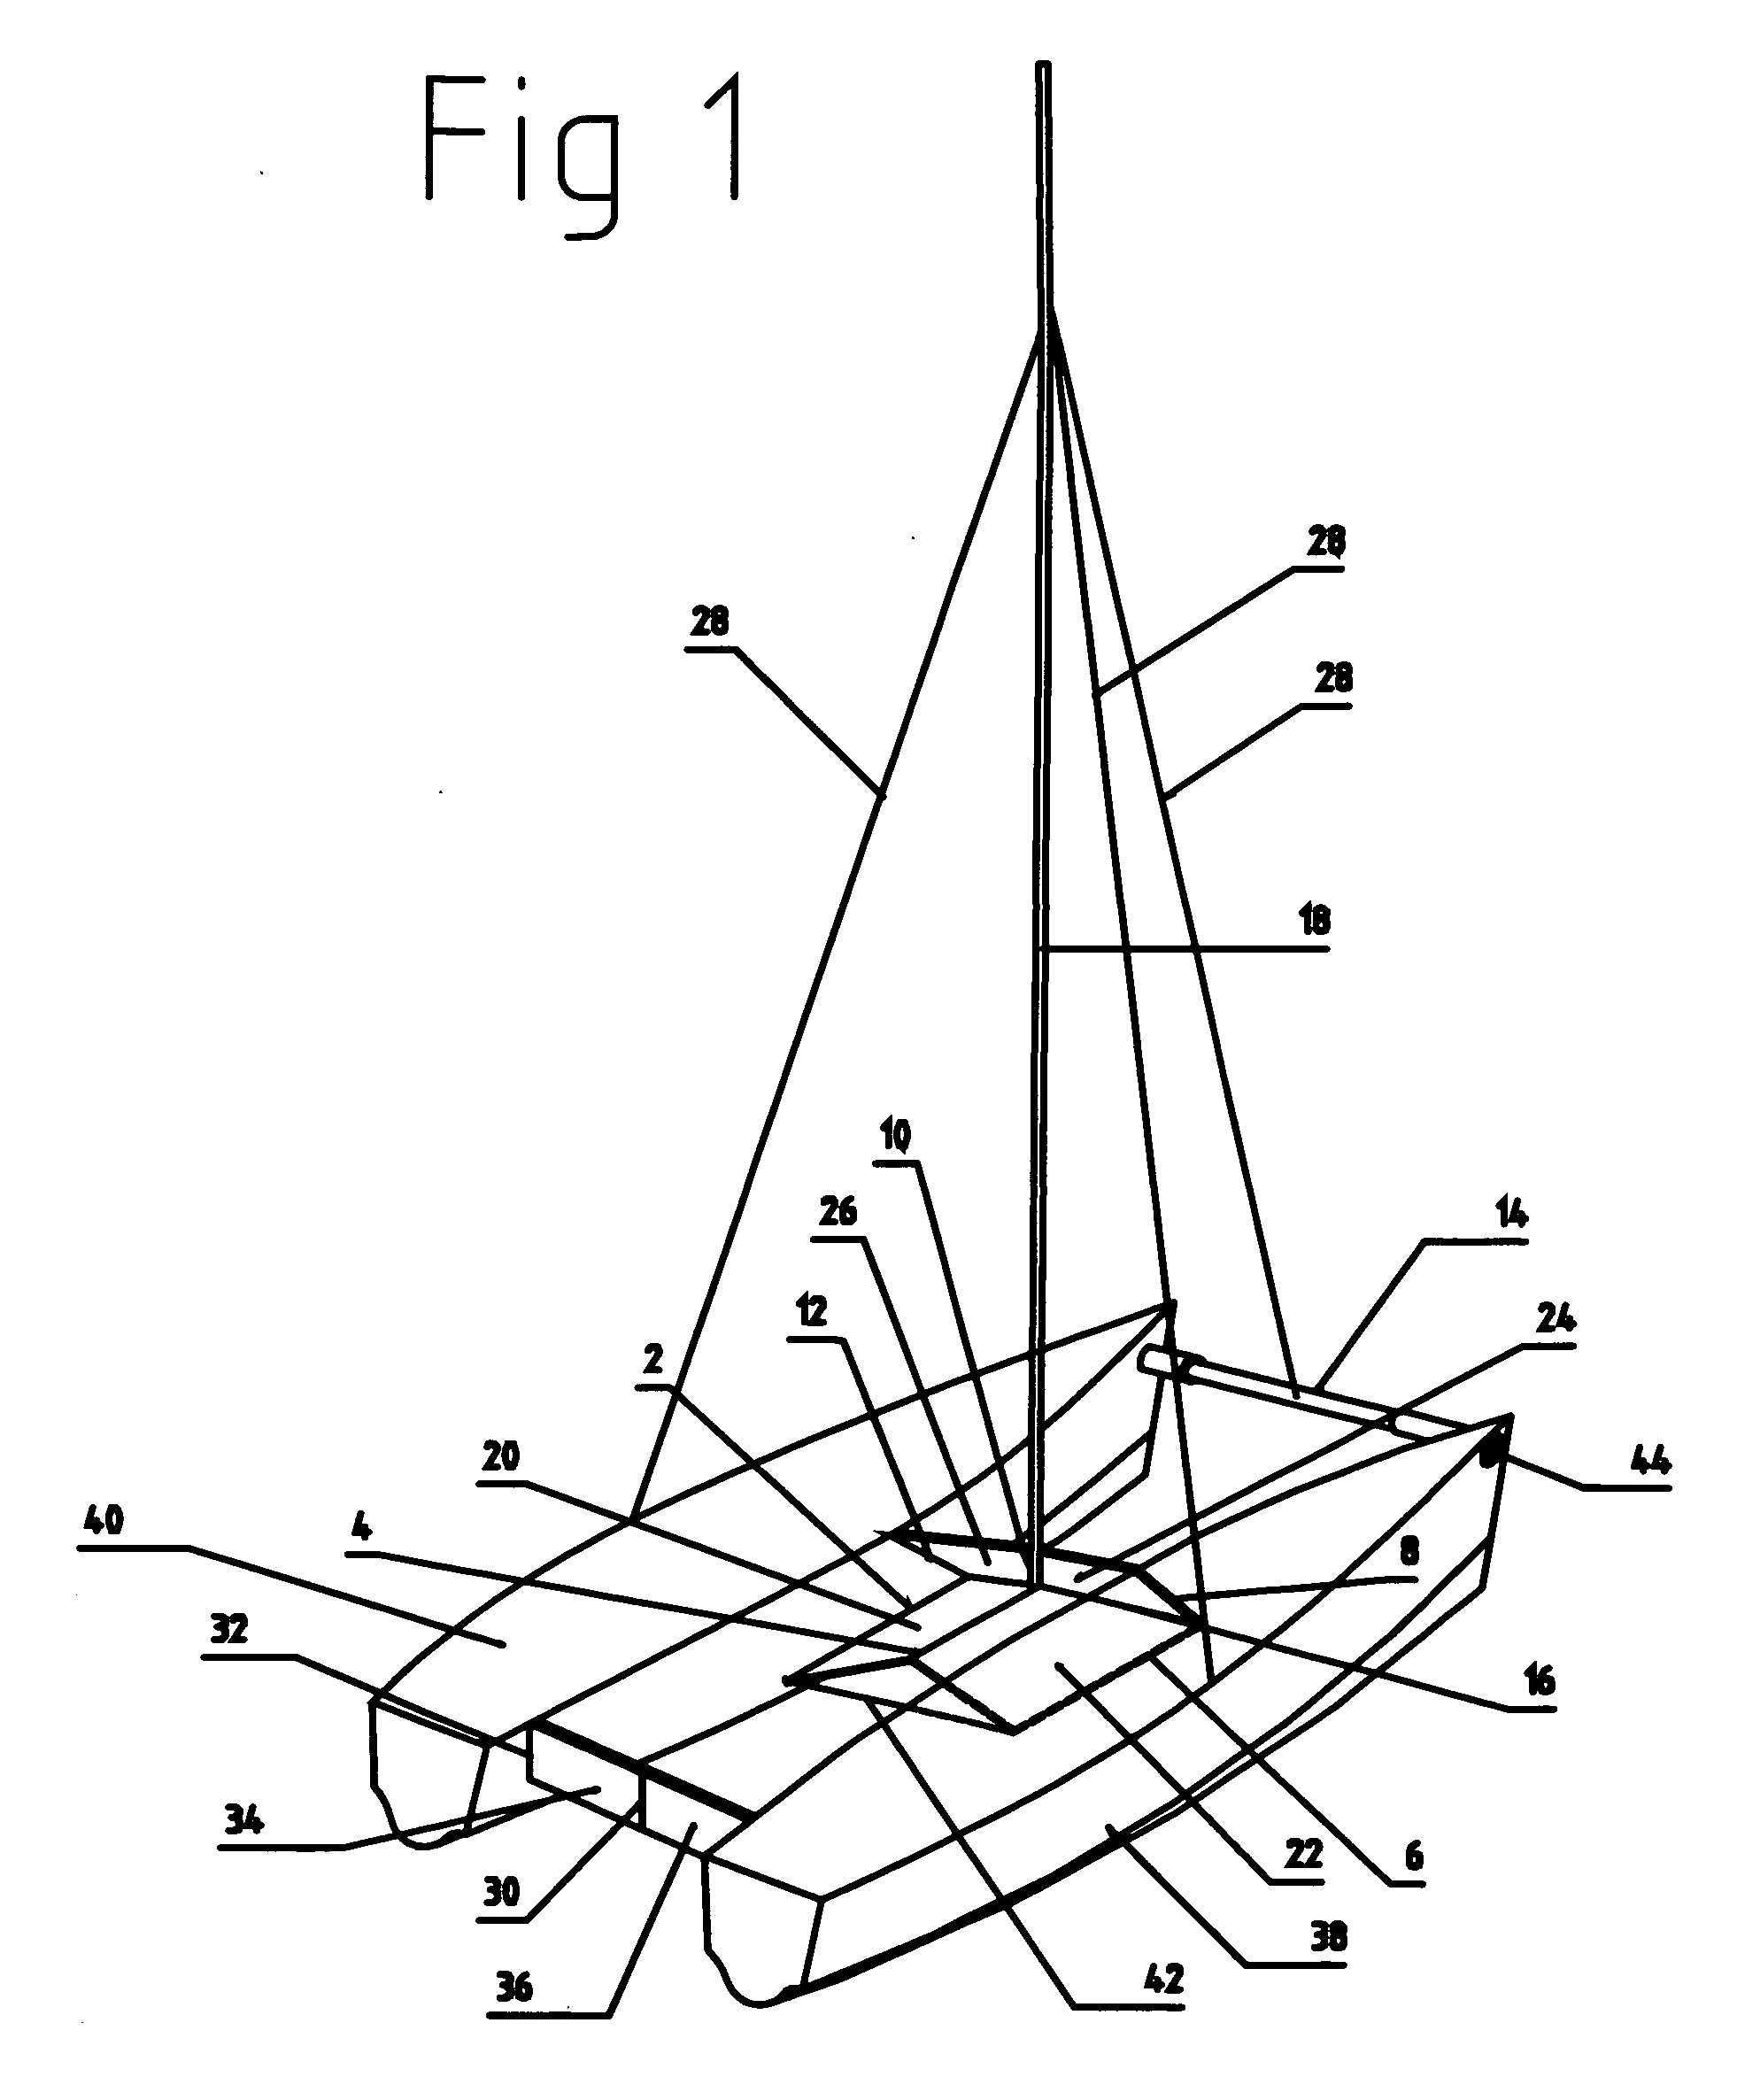 Mechanism for collapsible catamaran